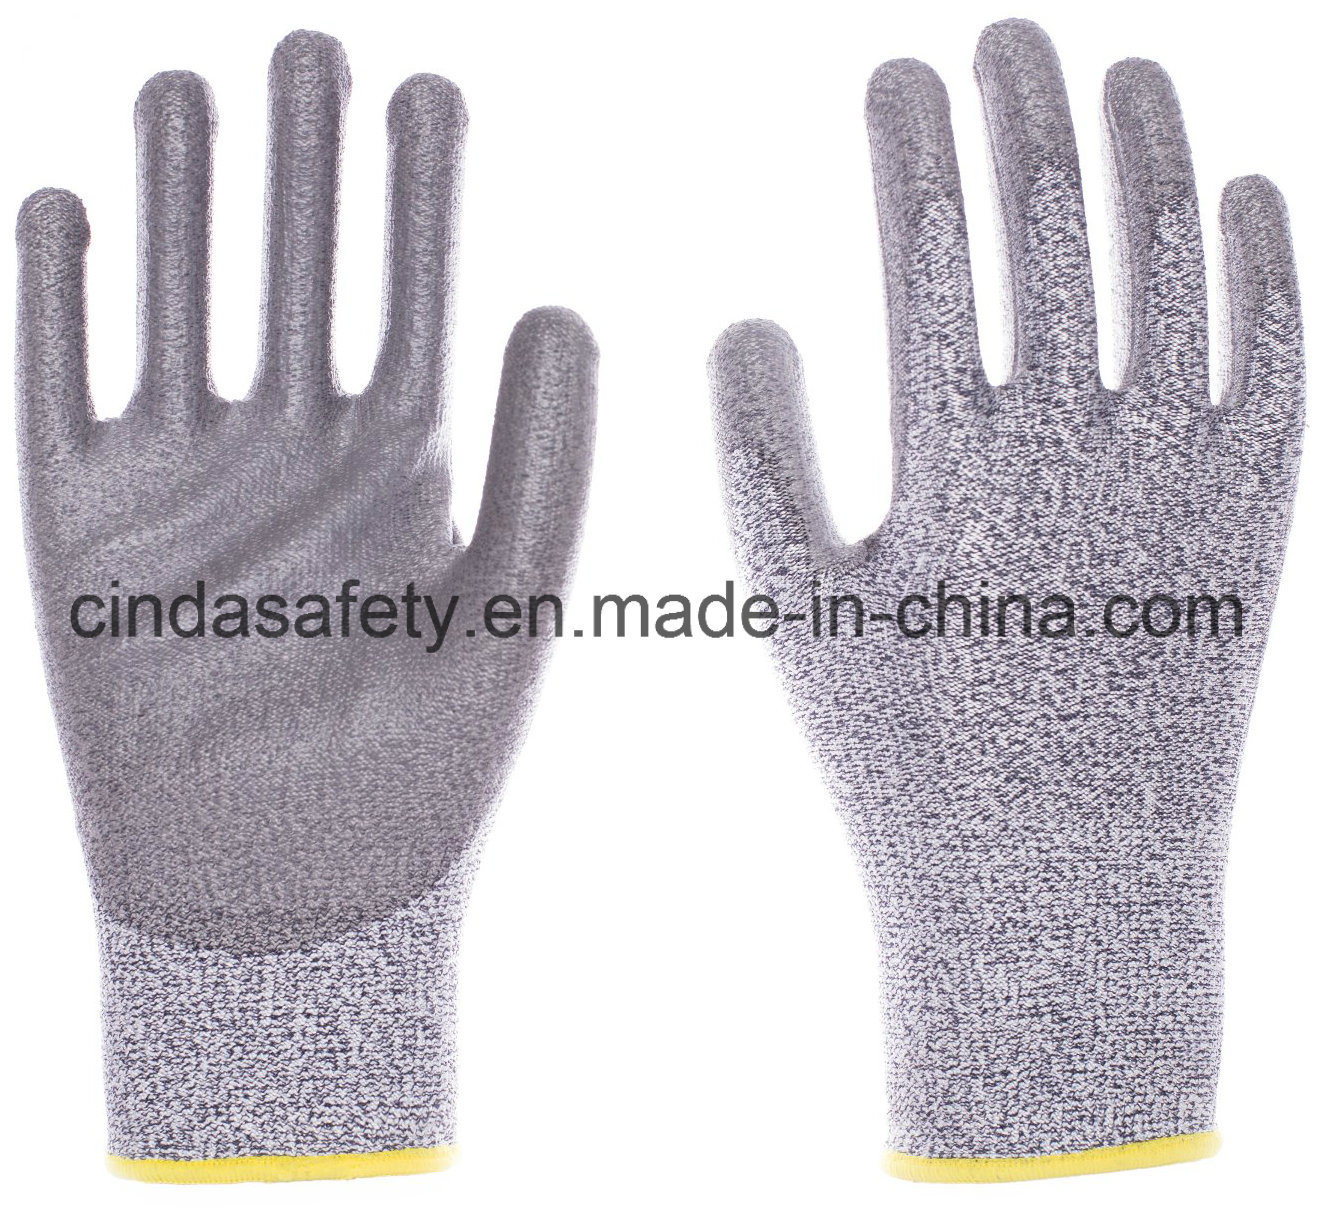 Anti-Cut 5 PU Palm Coated Safety Work Gloves